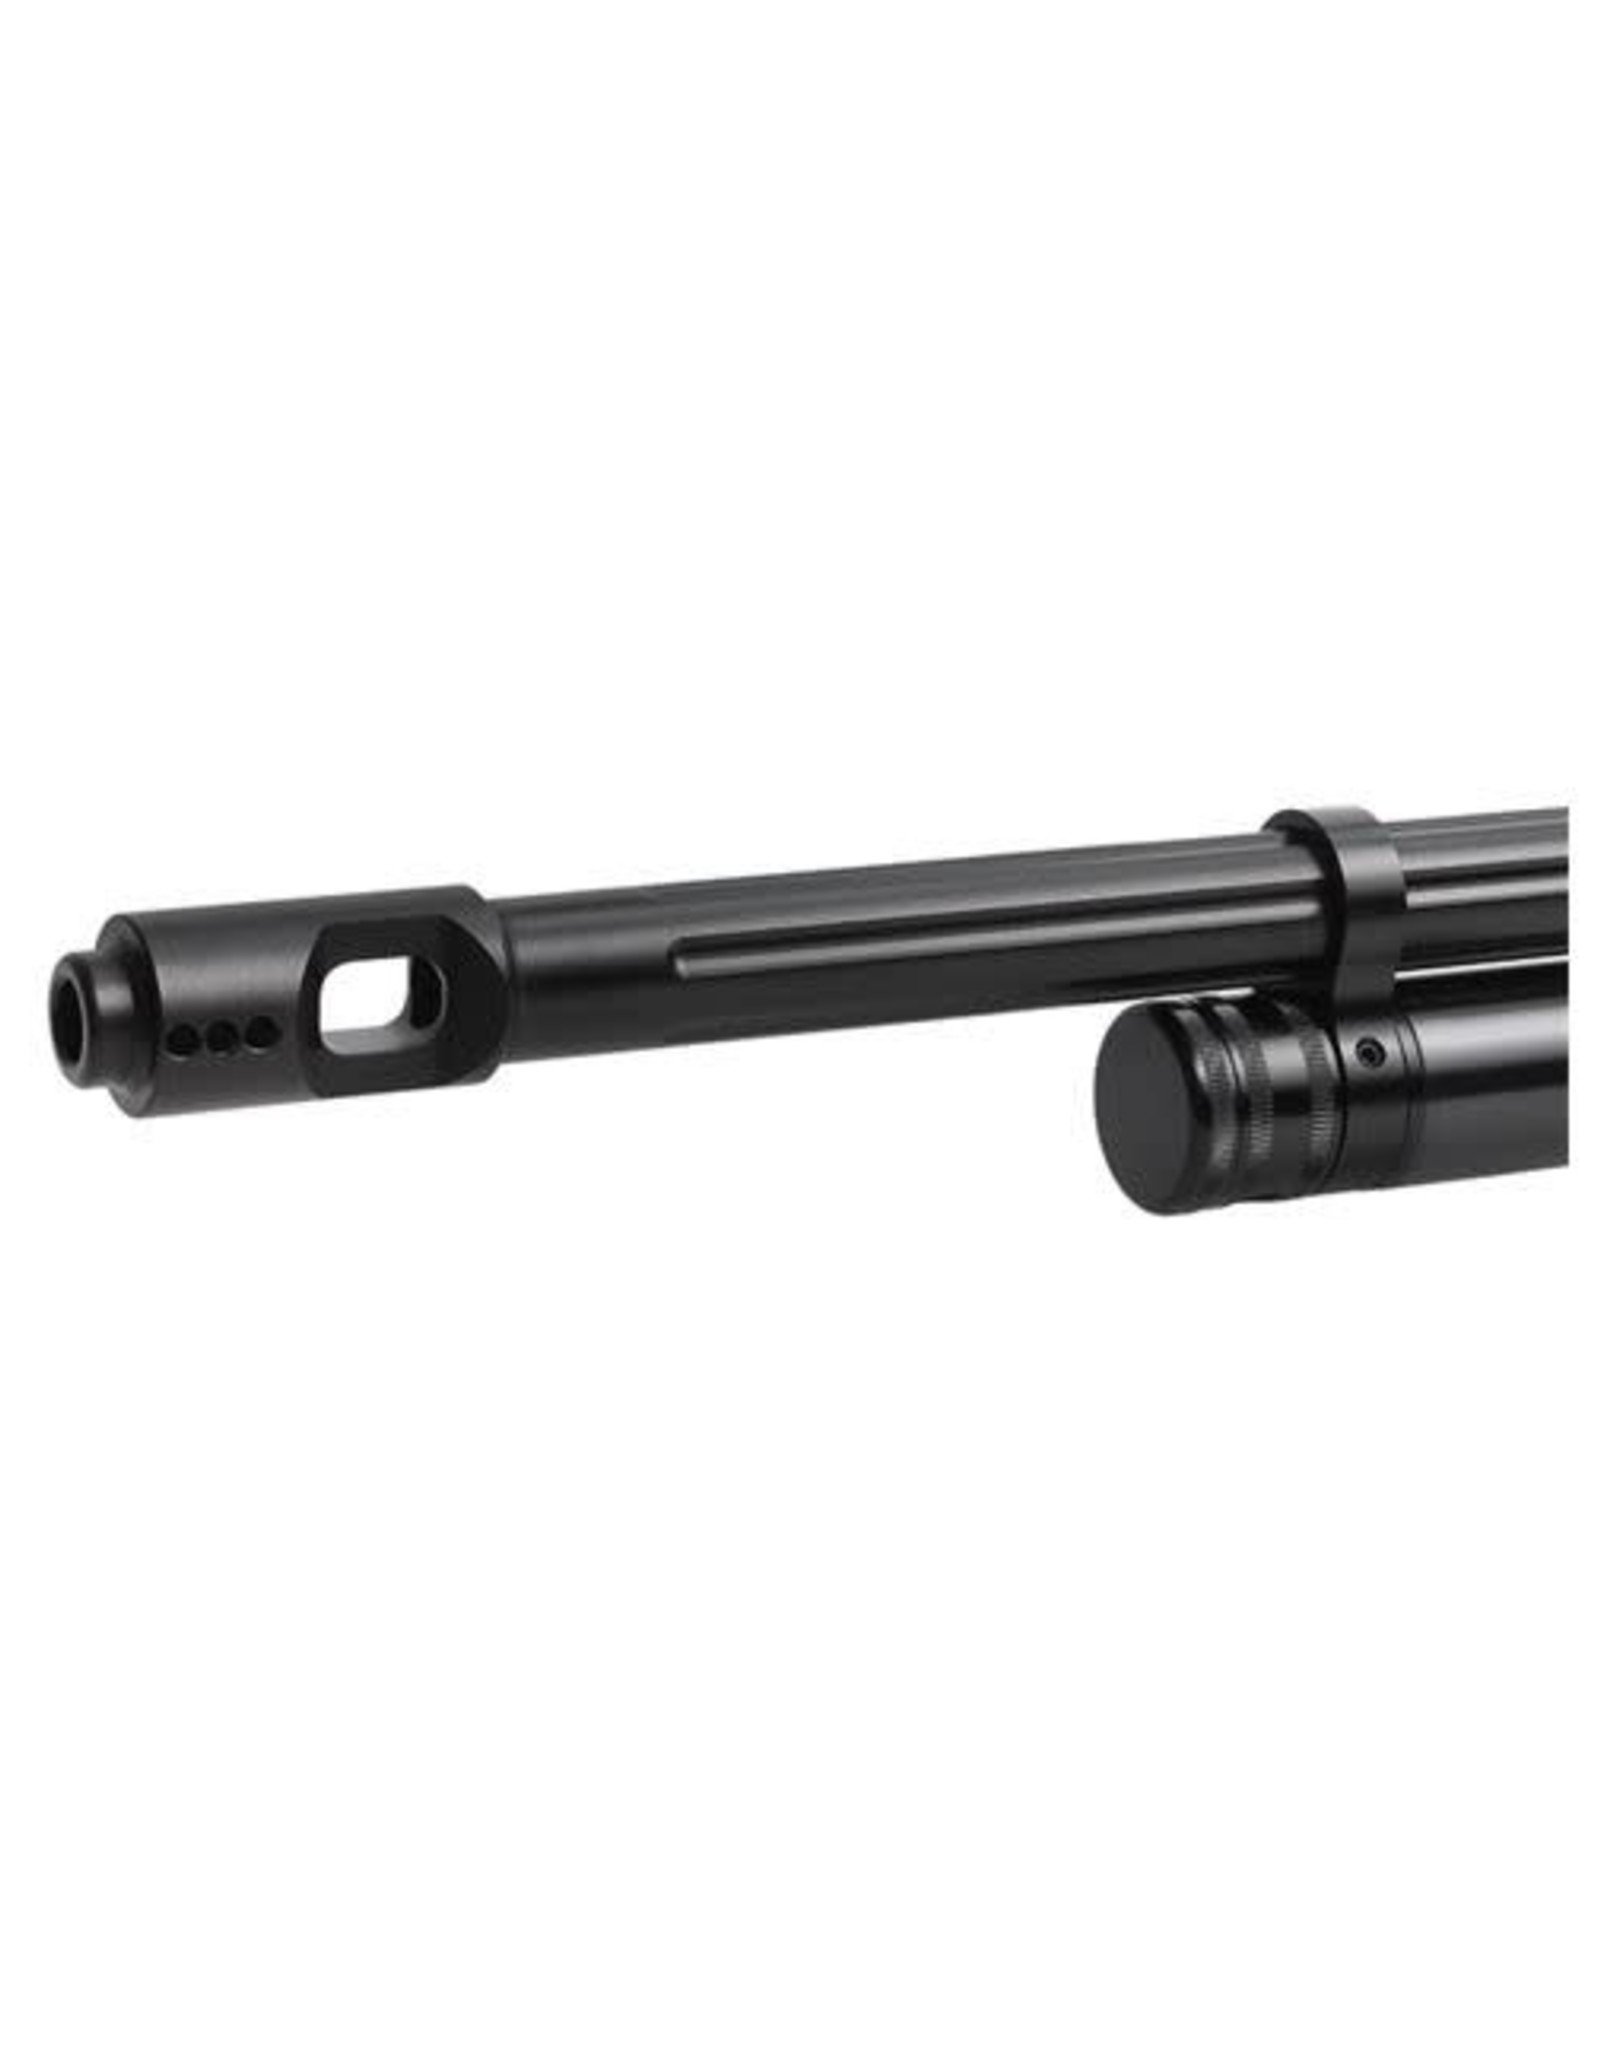 Evanix Evanix Sniper Tactical PCP Air Rifle .357 Caliber (9mm) - Two 6 Round Magazines